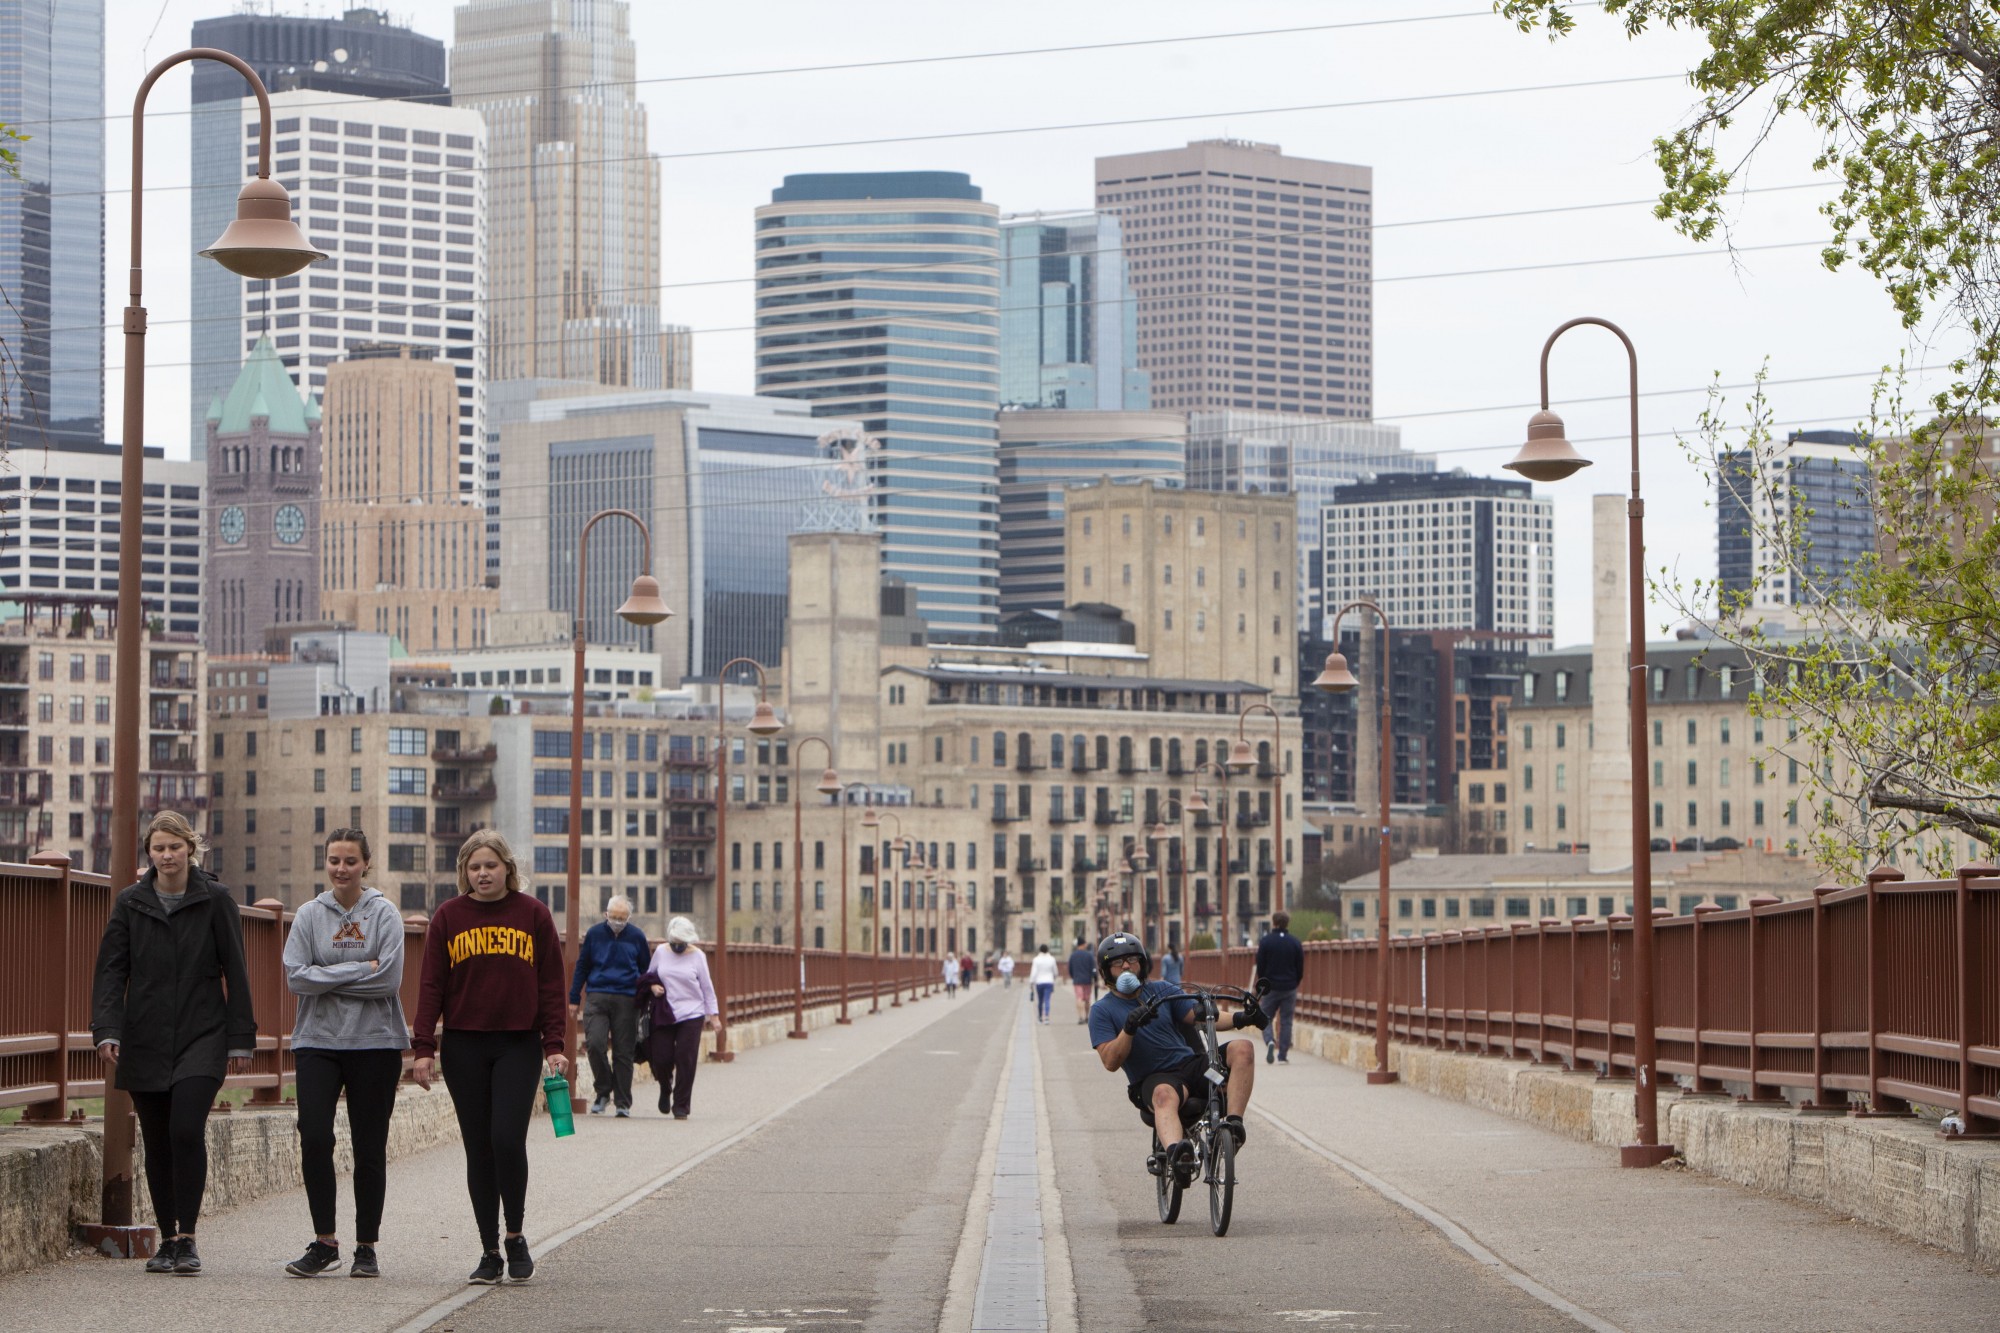 12:06 p.m.
Pedestrians run, bike, and walk across the Stone Arch Bridge. 